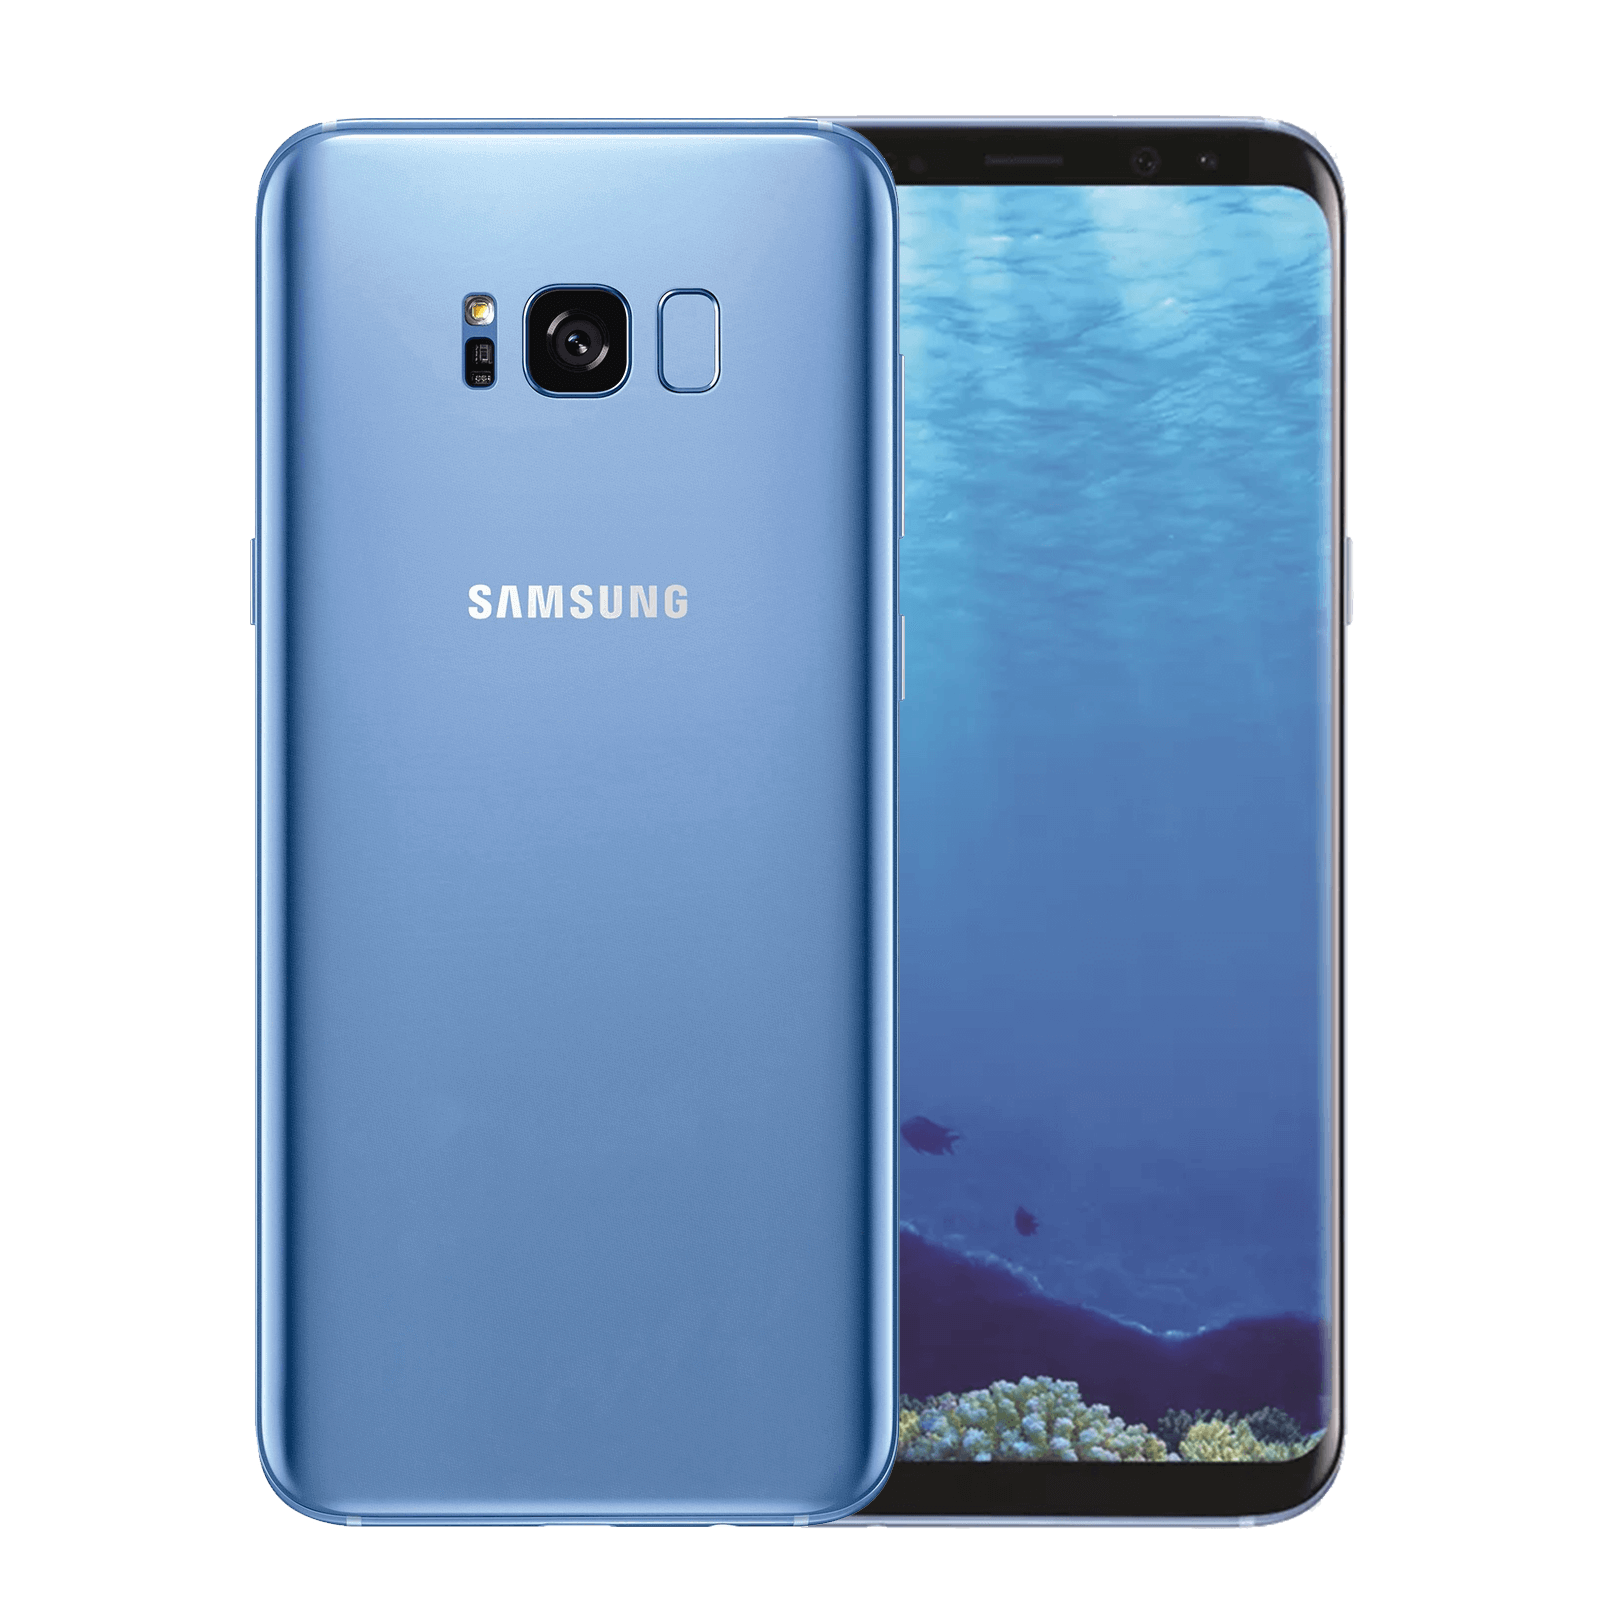 Samsung Galaxy S8 64GB Blue G950F Good - Unlocked 64GB Blue Good